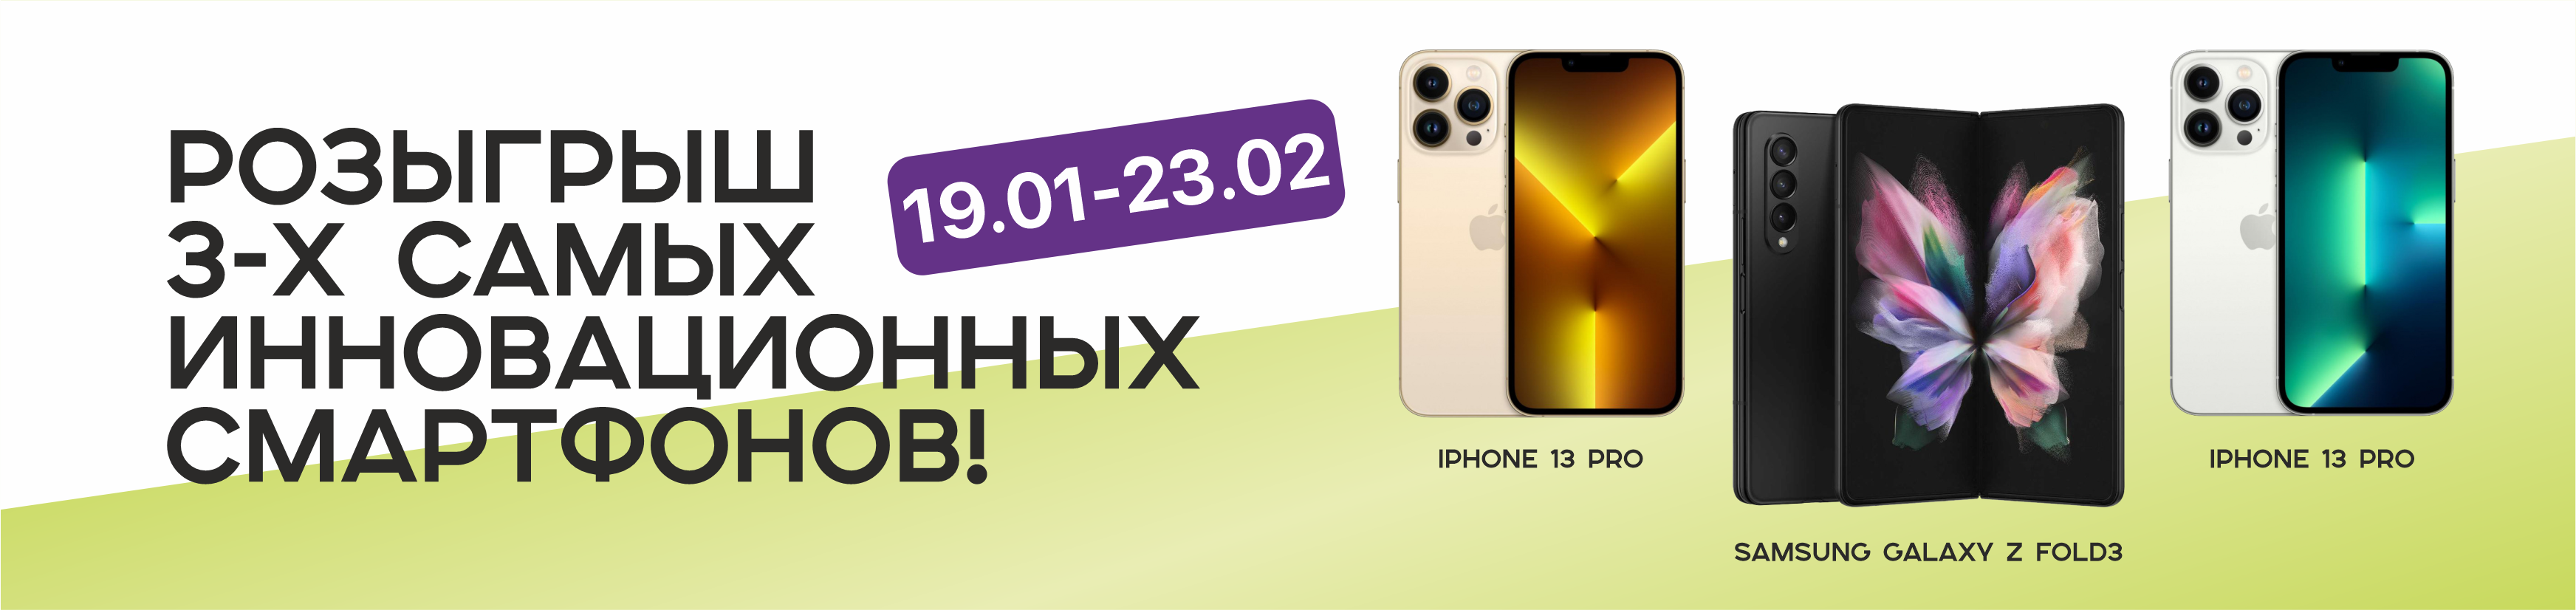 Розыгрыш 2-х iPhone 13 Pro и Samsung Galaxy Z Fold3 (19.01.22 по 23.02.22)